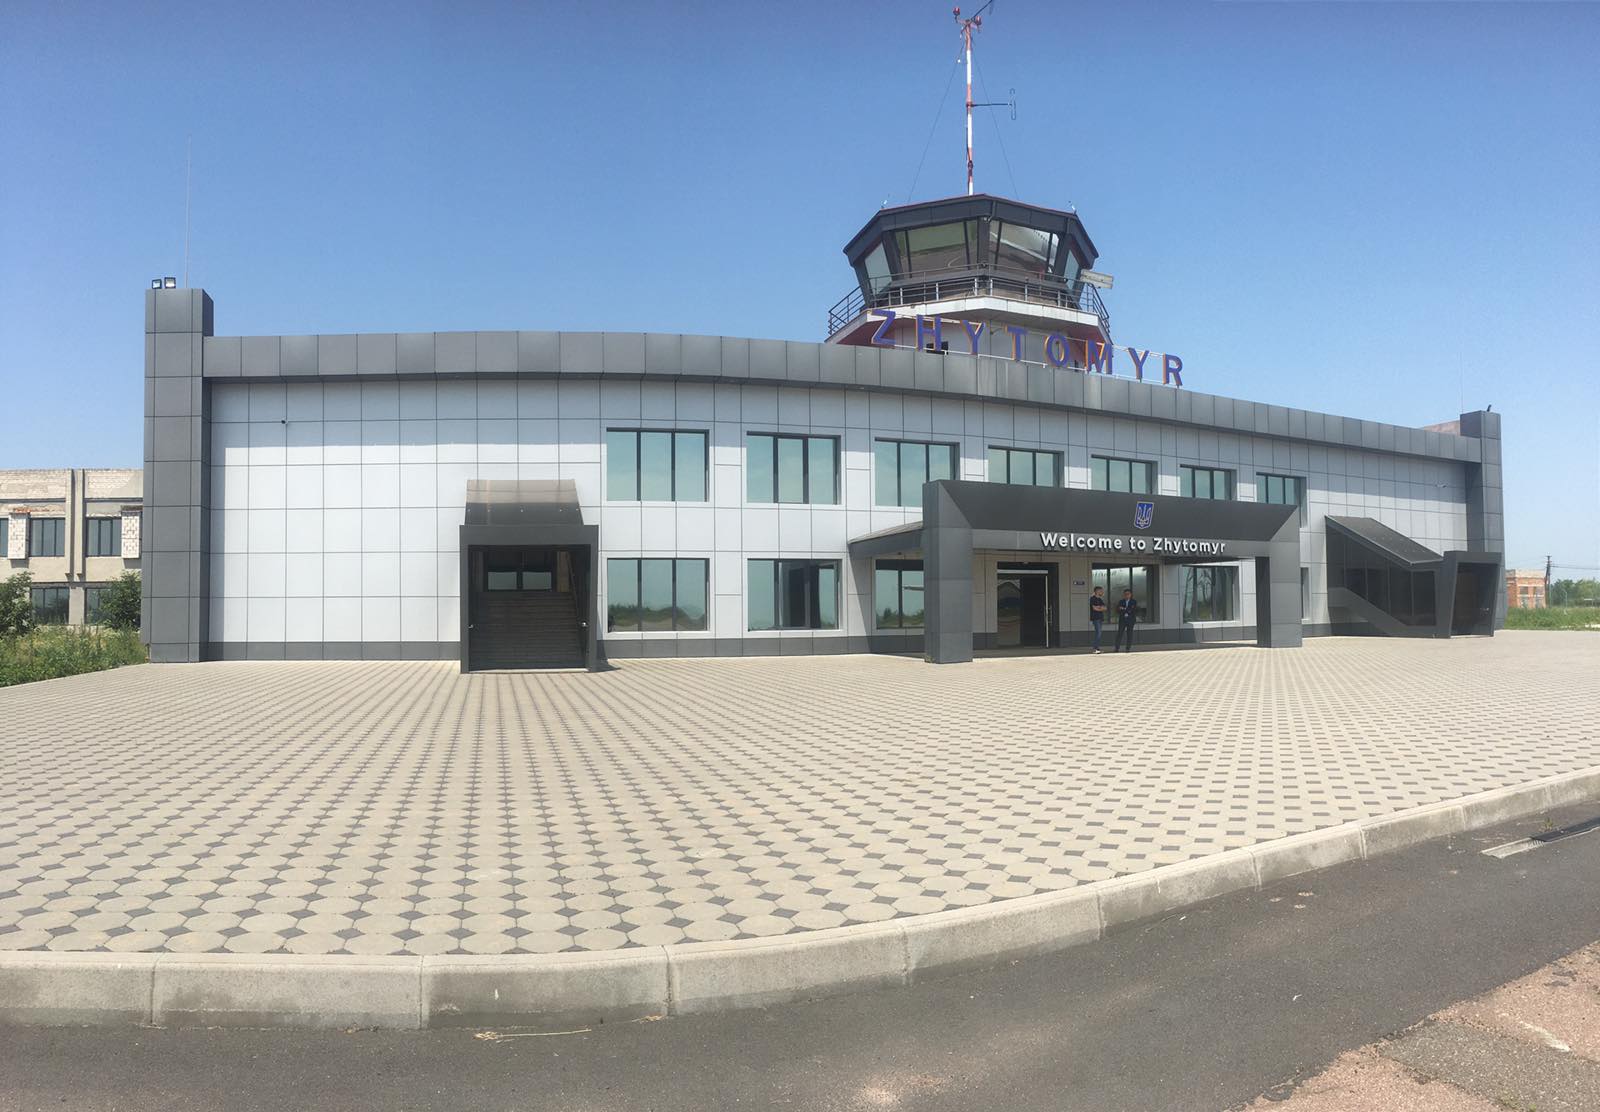 Аеропорт 